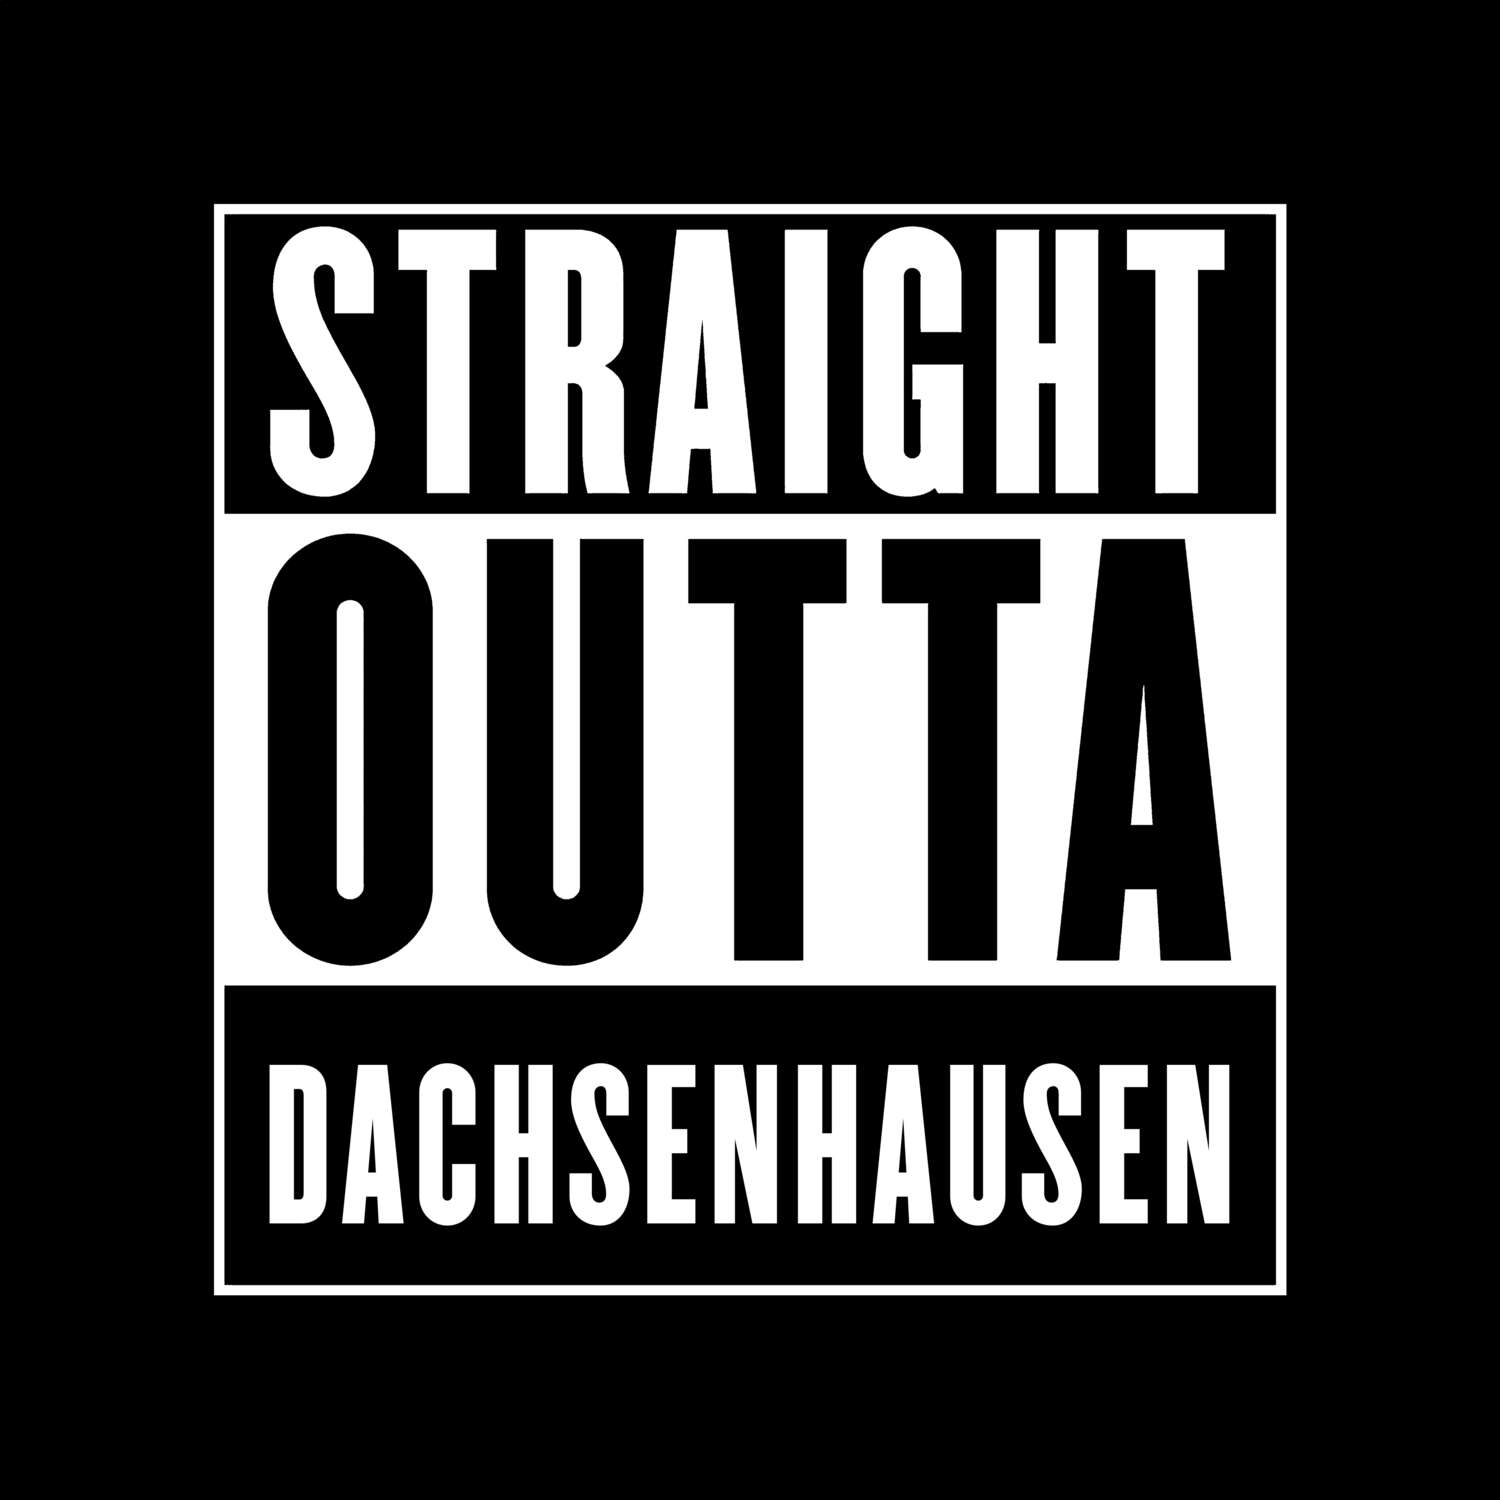 Dachsenhausen T-Shirt »Straight Outta«